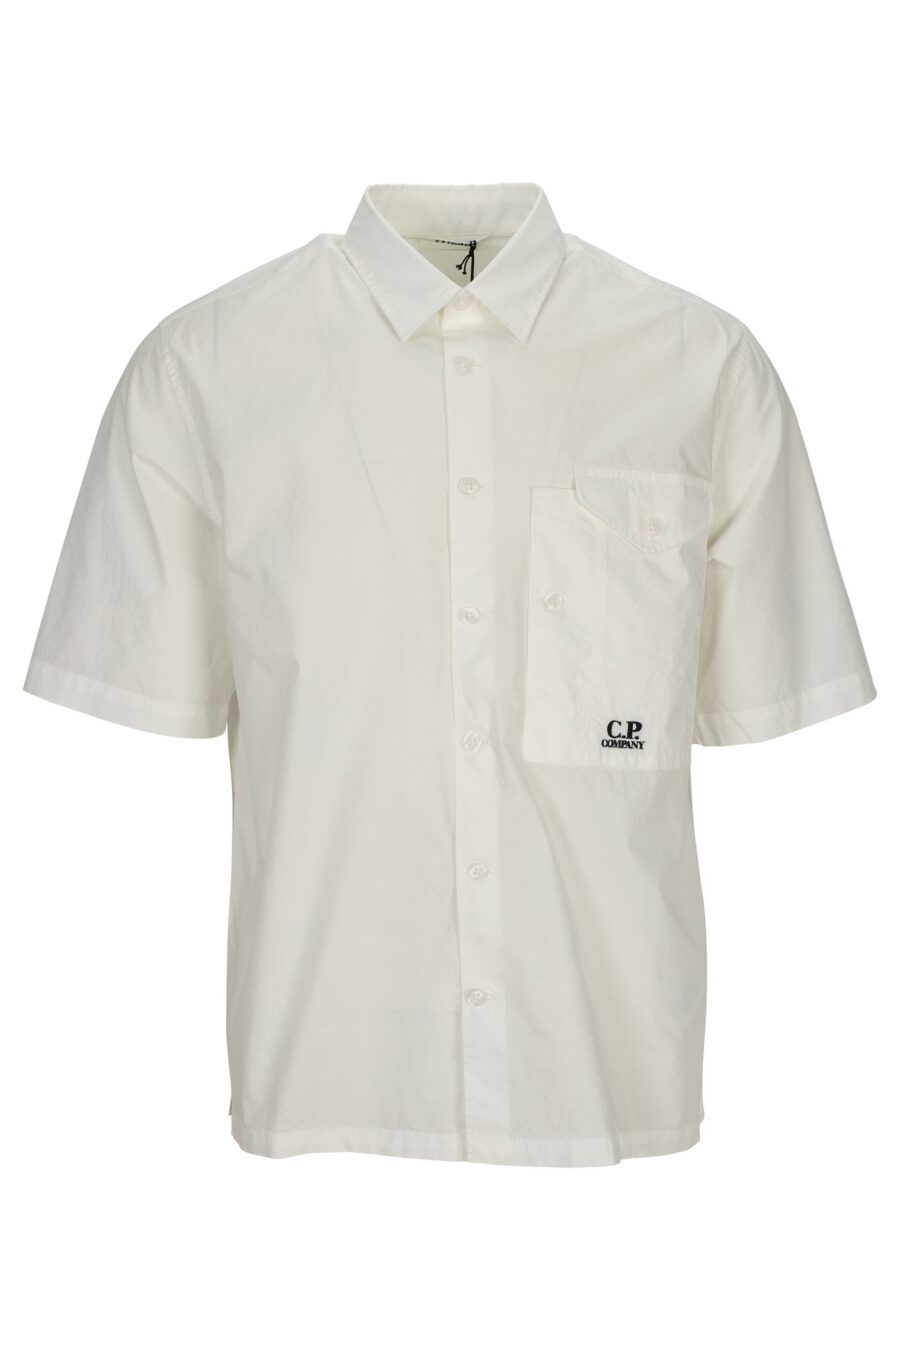 Short sleeve white shirt with pocket and mini logo - 7620943694826